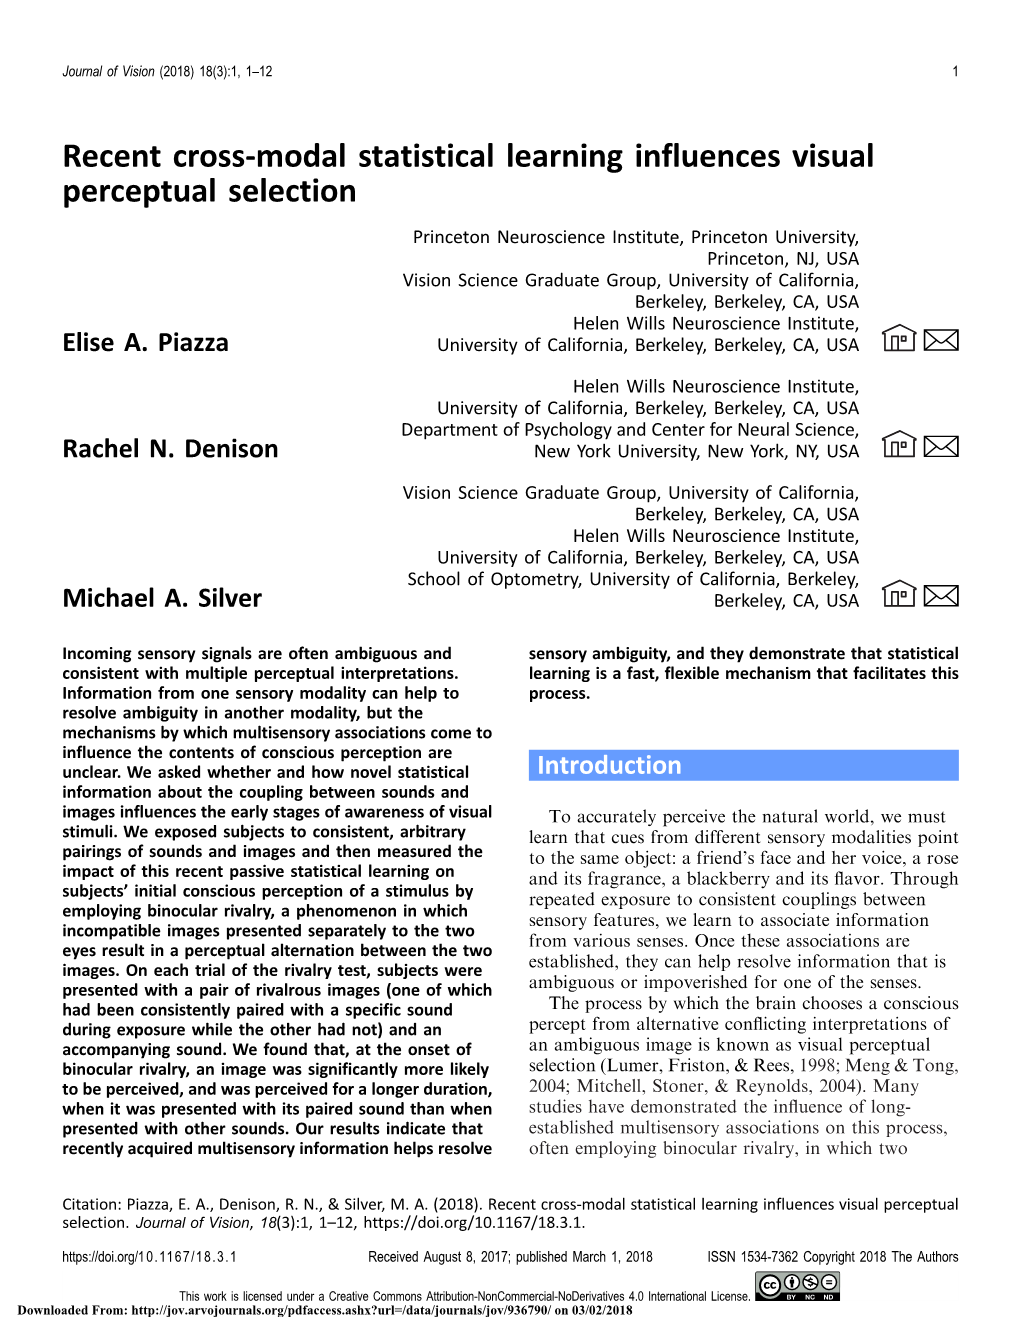 Rapid Cross-Modal Statistical Learning Influences Visual Perceptual